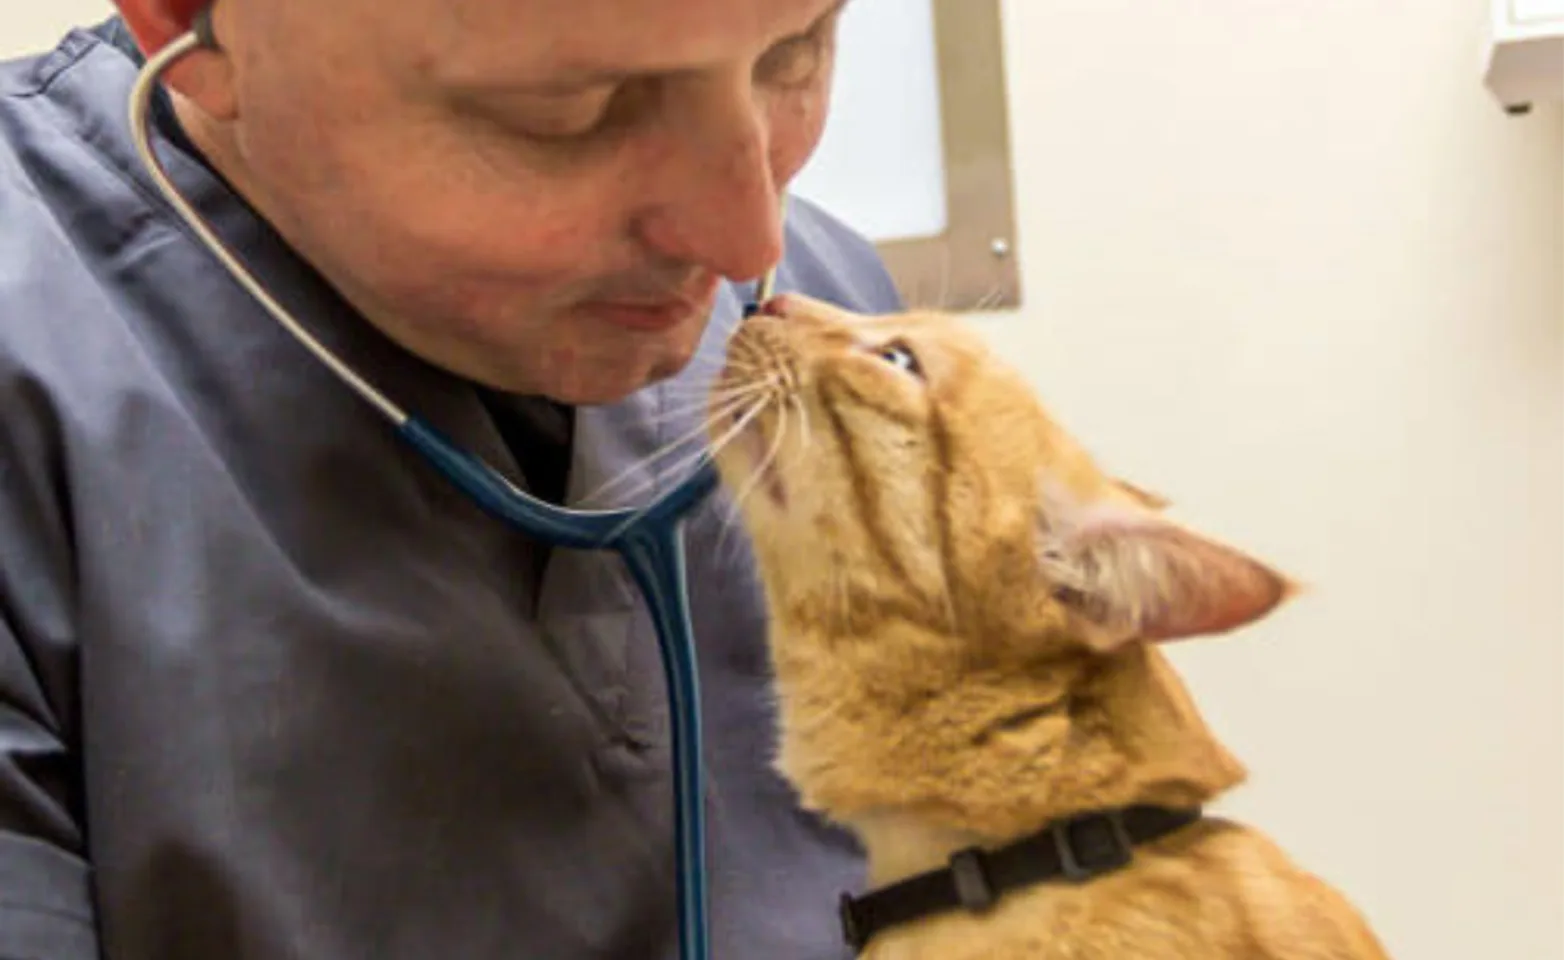 Veterinarian and orange cat nose-to-nose